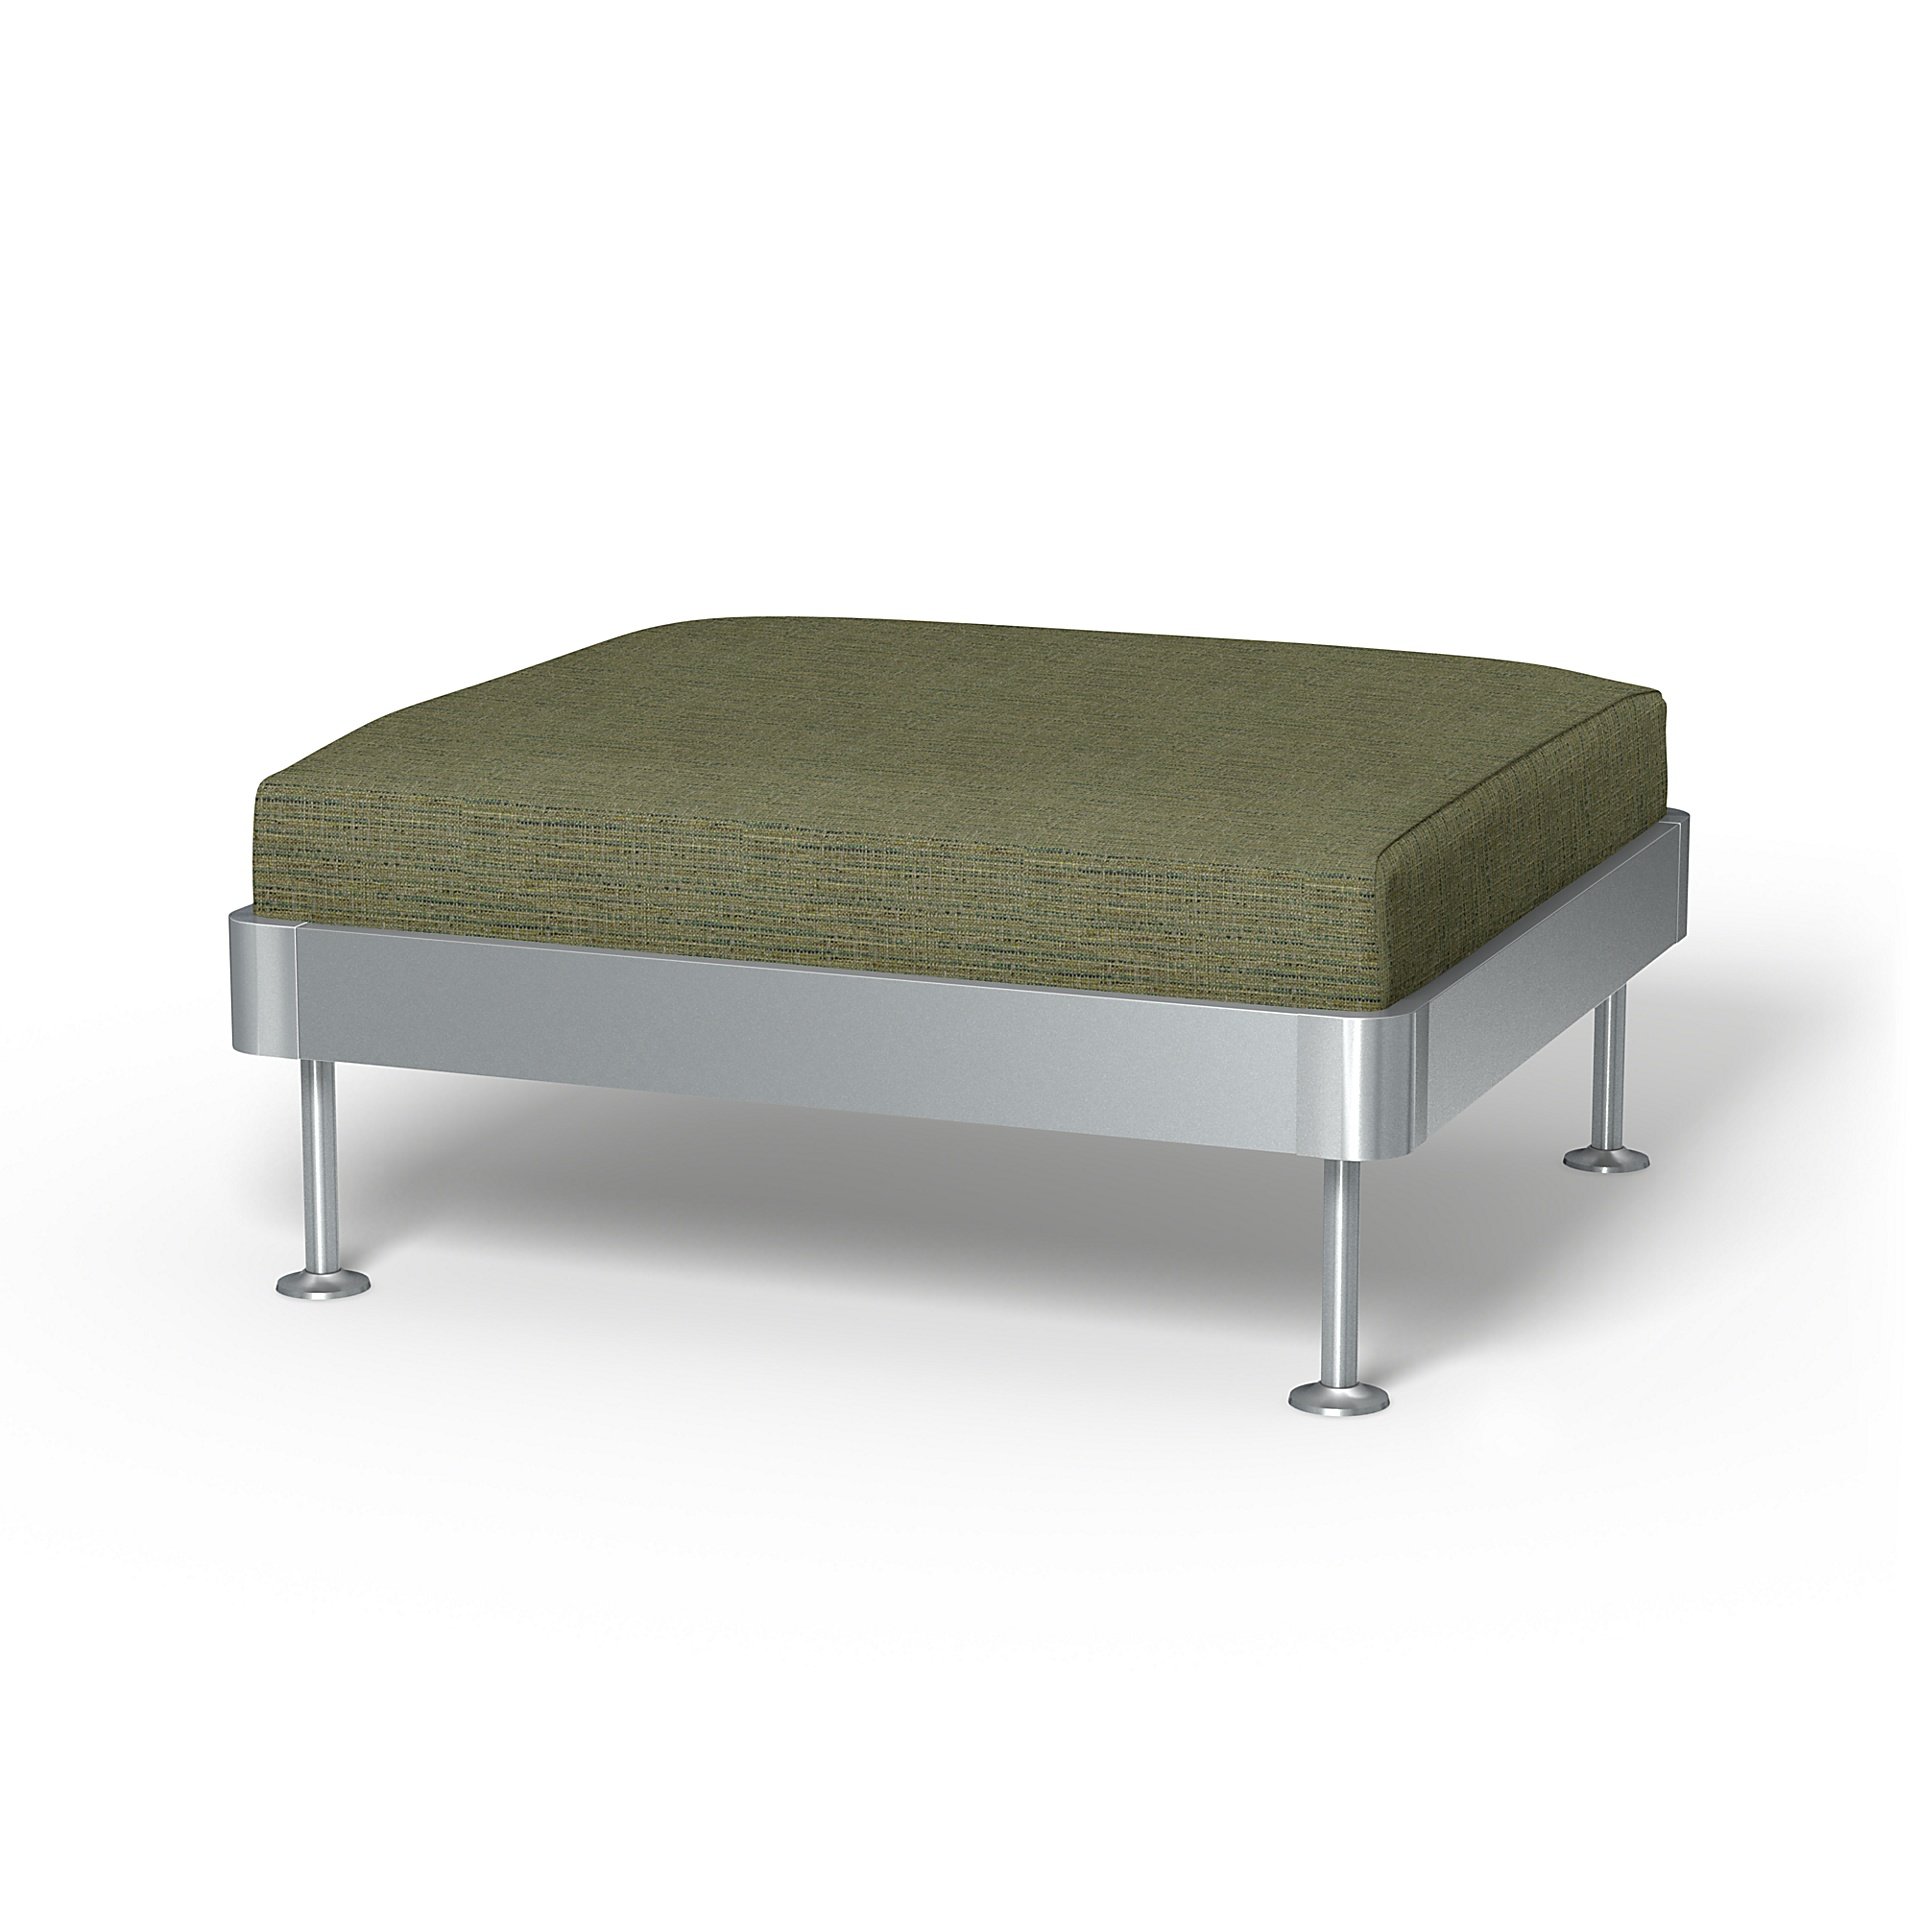 IKEA - Delaktig 1 Seat Platform Cover, Meadow Green, Boucle & Texture - Bemz